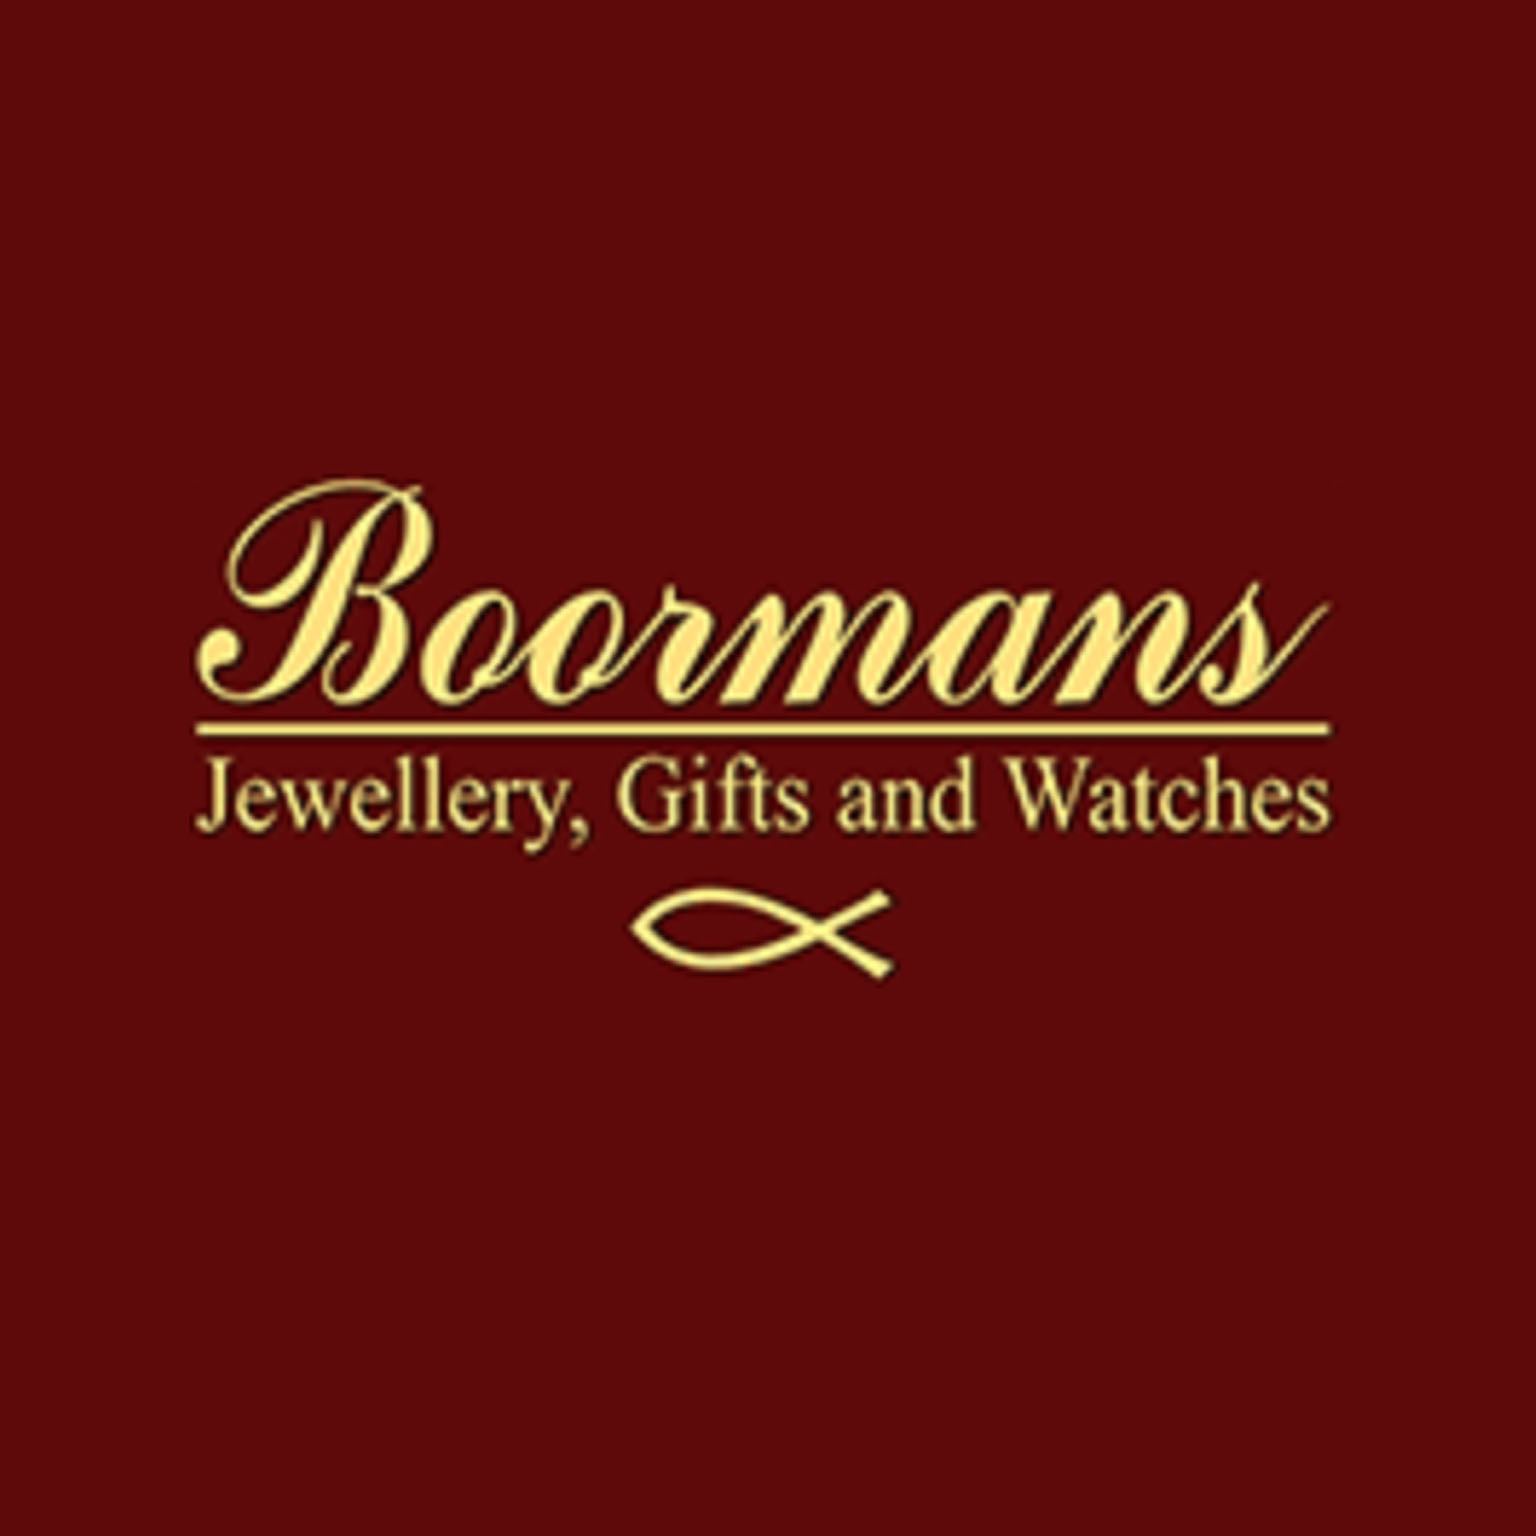 Boormans Jewellers